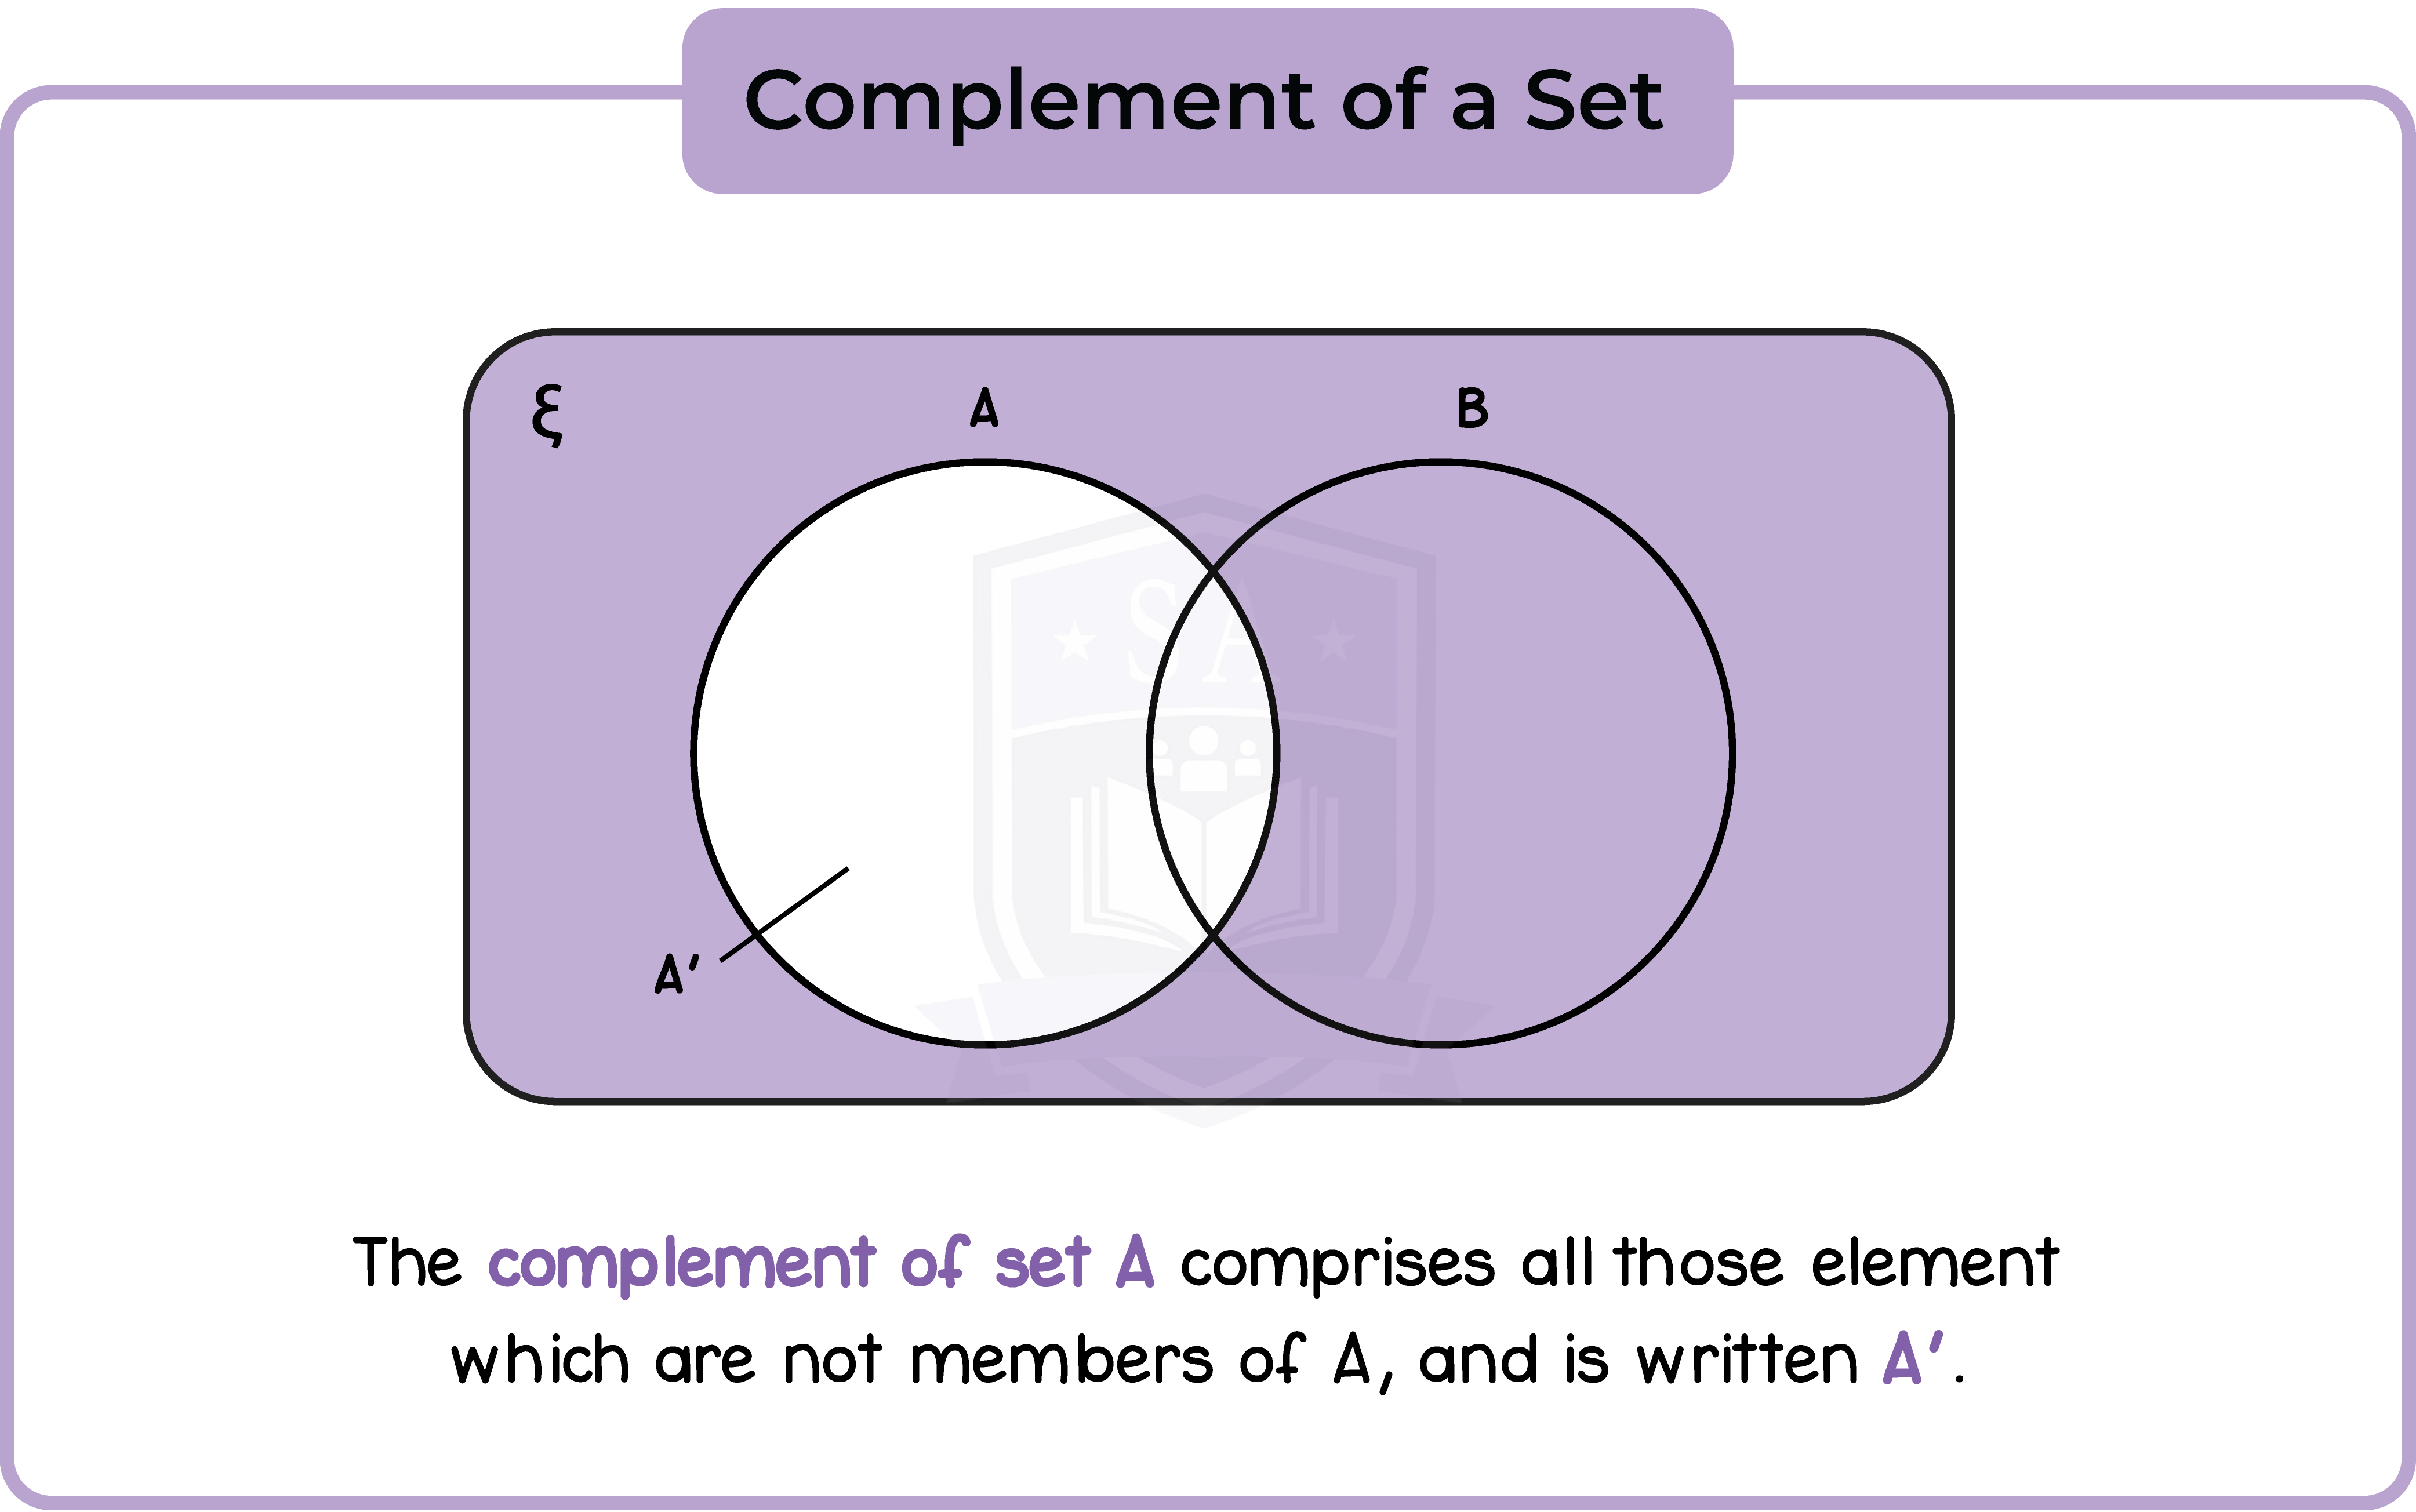 edexcel_igcse_mathematics a_topic 05_set language and notation_006_compliment of a set